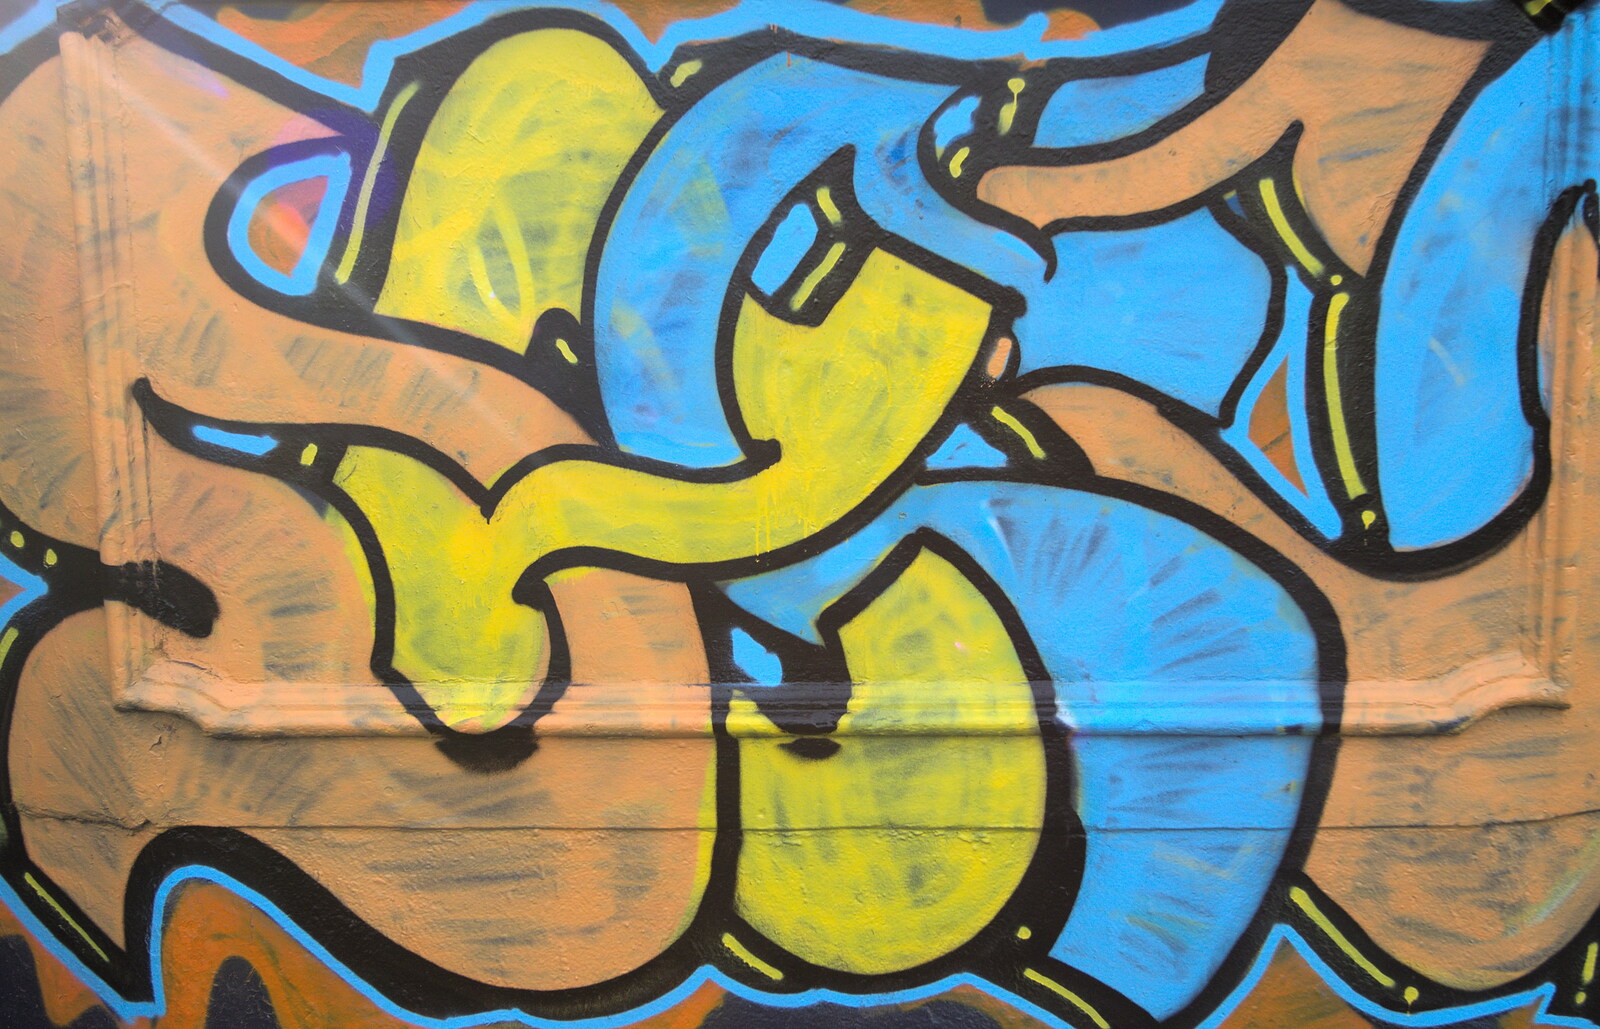 Intaglio graffiti tag from A Morning in Blackrock, County Dublin, Ireland - 8th January 2012